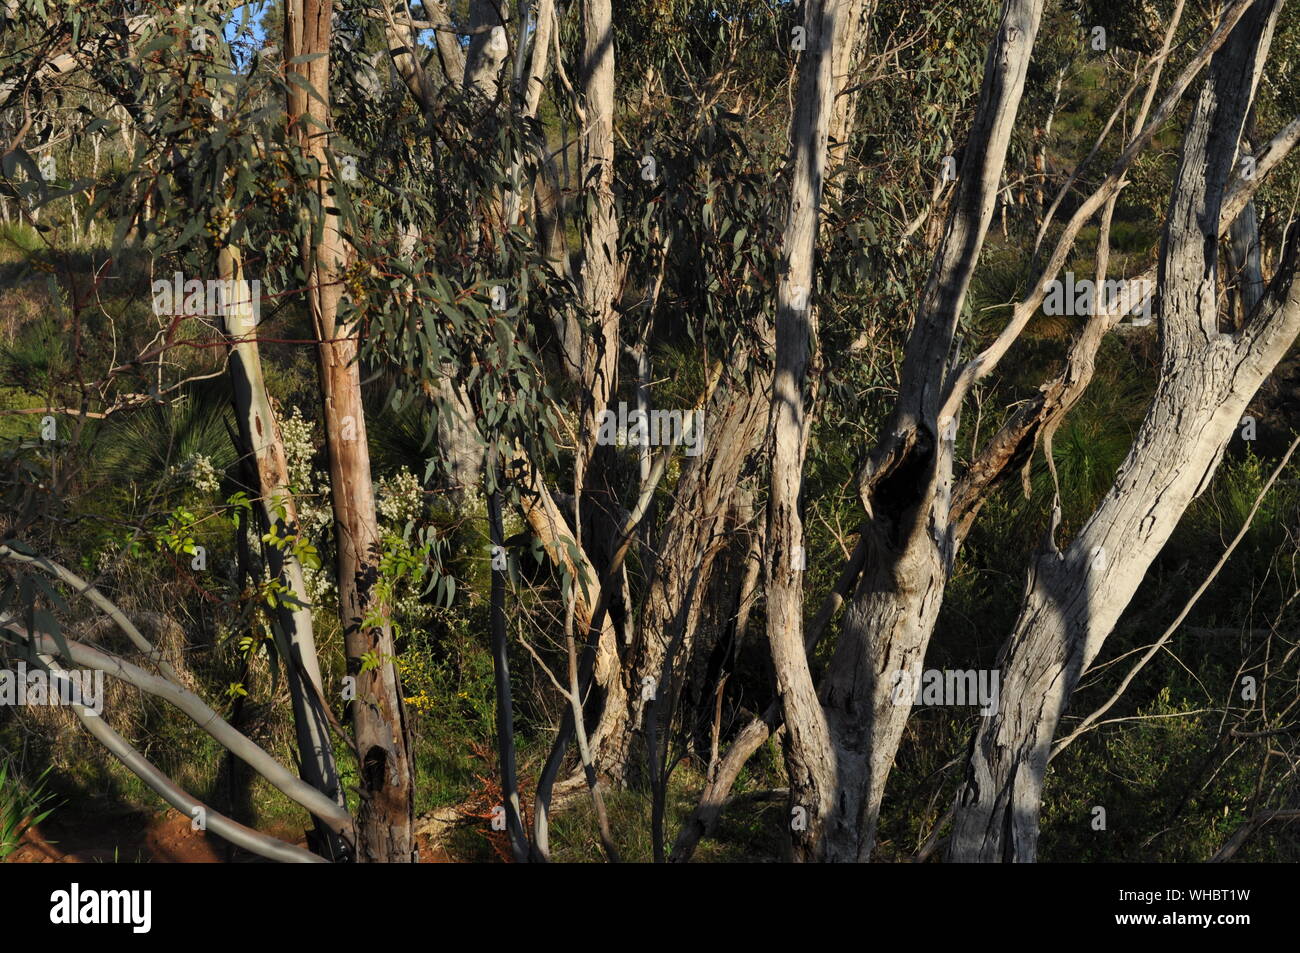 Eucalyptus trees and bushland, dense undergrowth in the forest,  Whistlepipe Gully Walk, Mundy Regional Park, Kalamunda, Western Australia, Australia Stock Photo